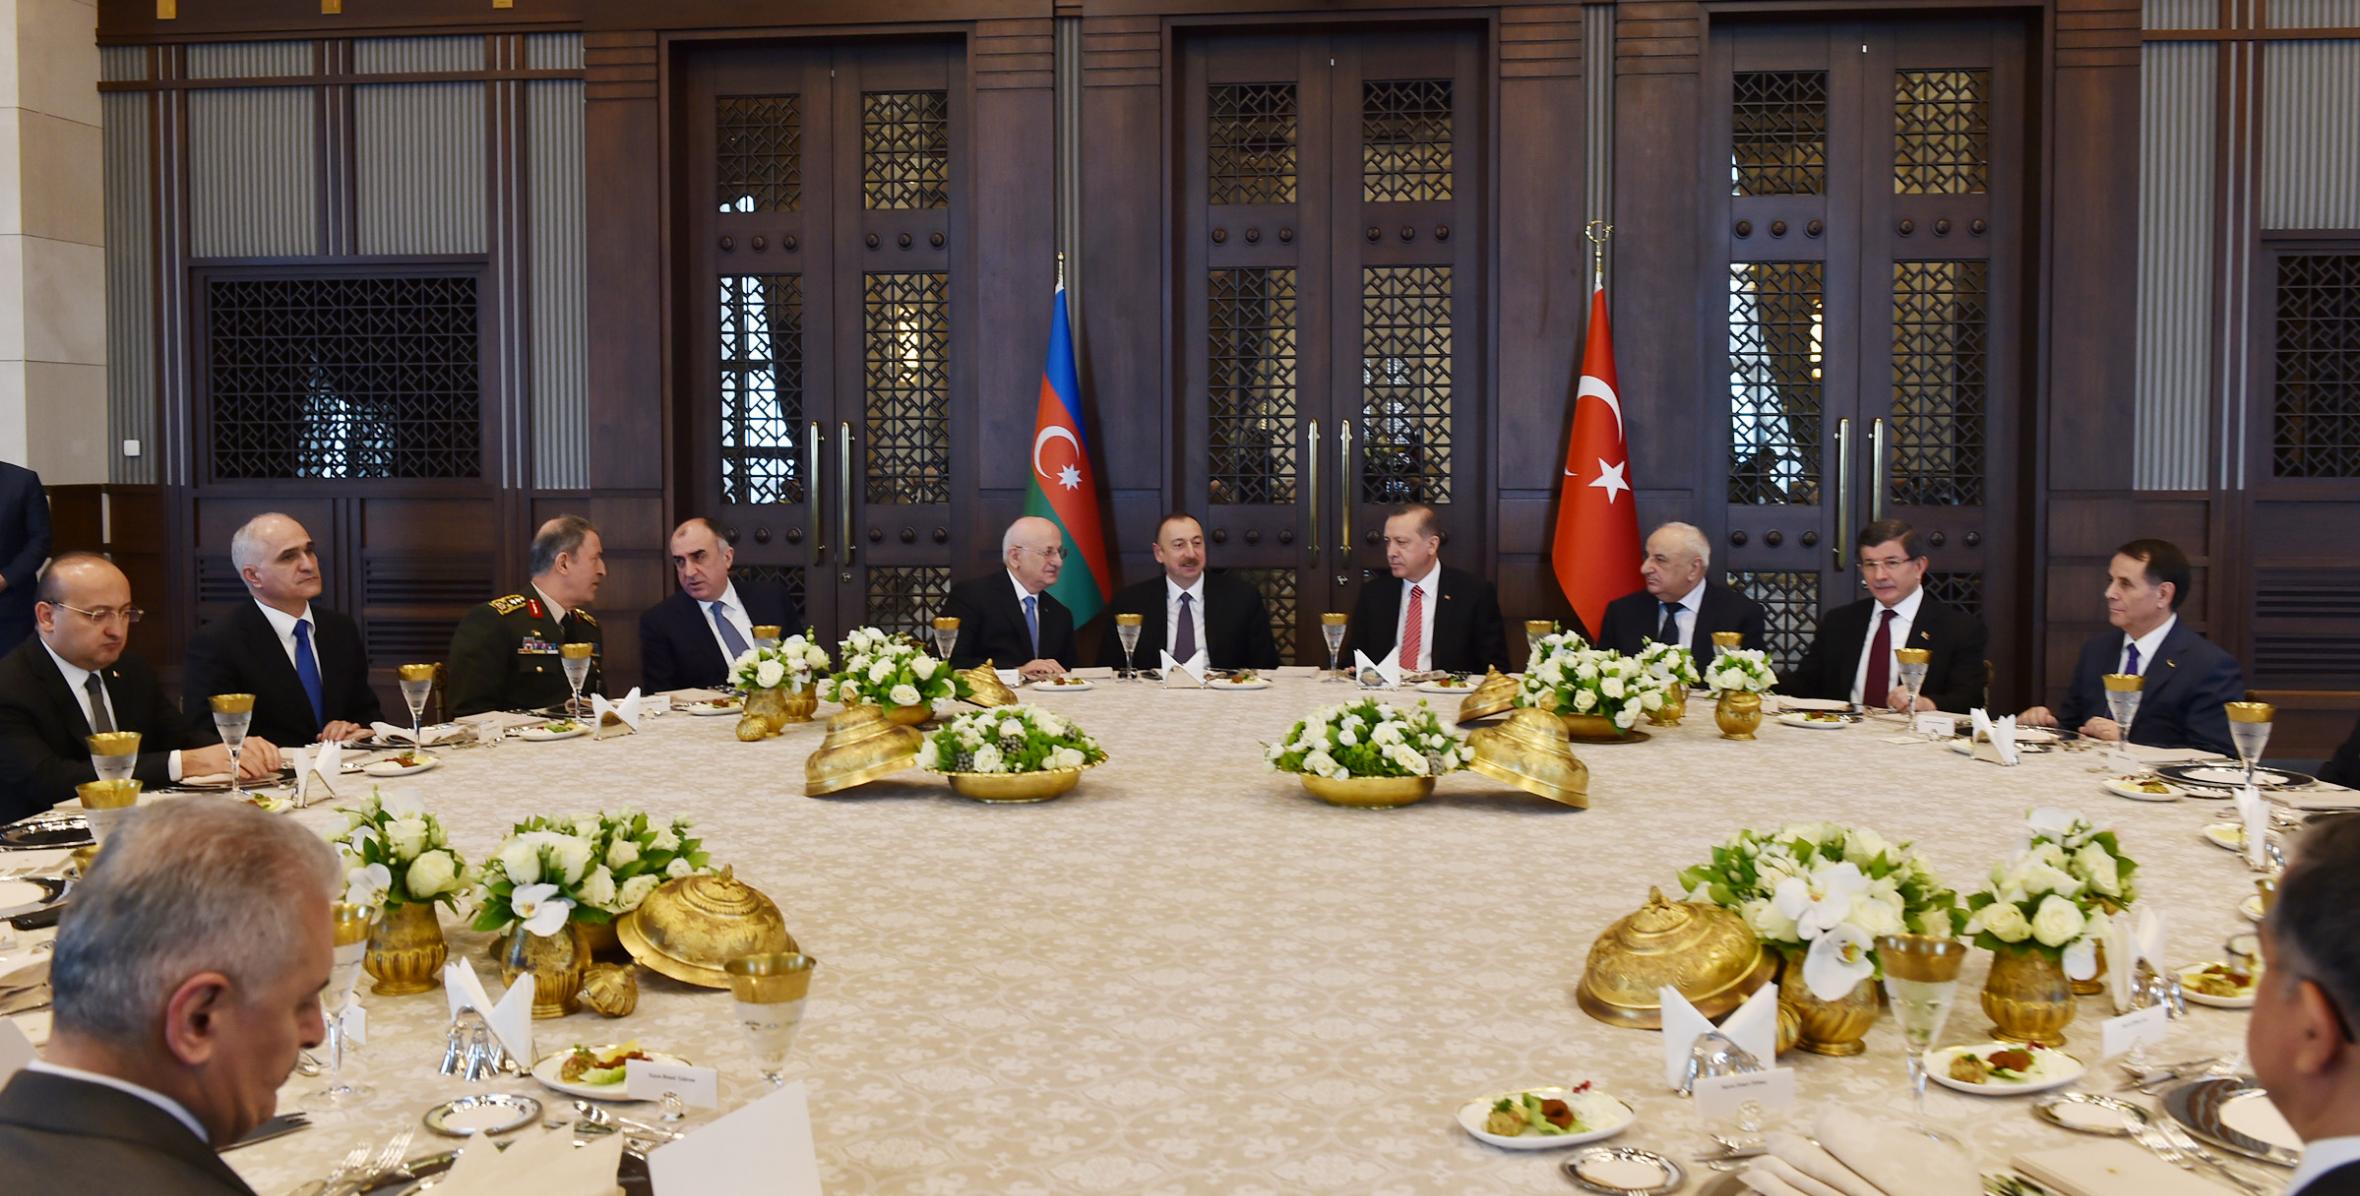 President of the Republic of Turkey Recep Tayyip Erdogan has hosted a reception in honor of Ilham Aliyev